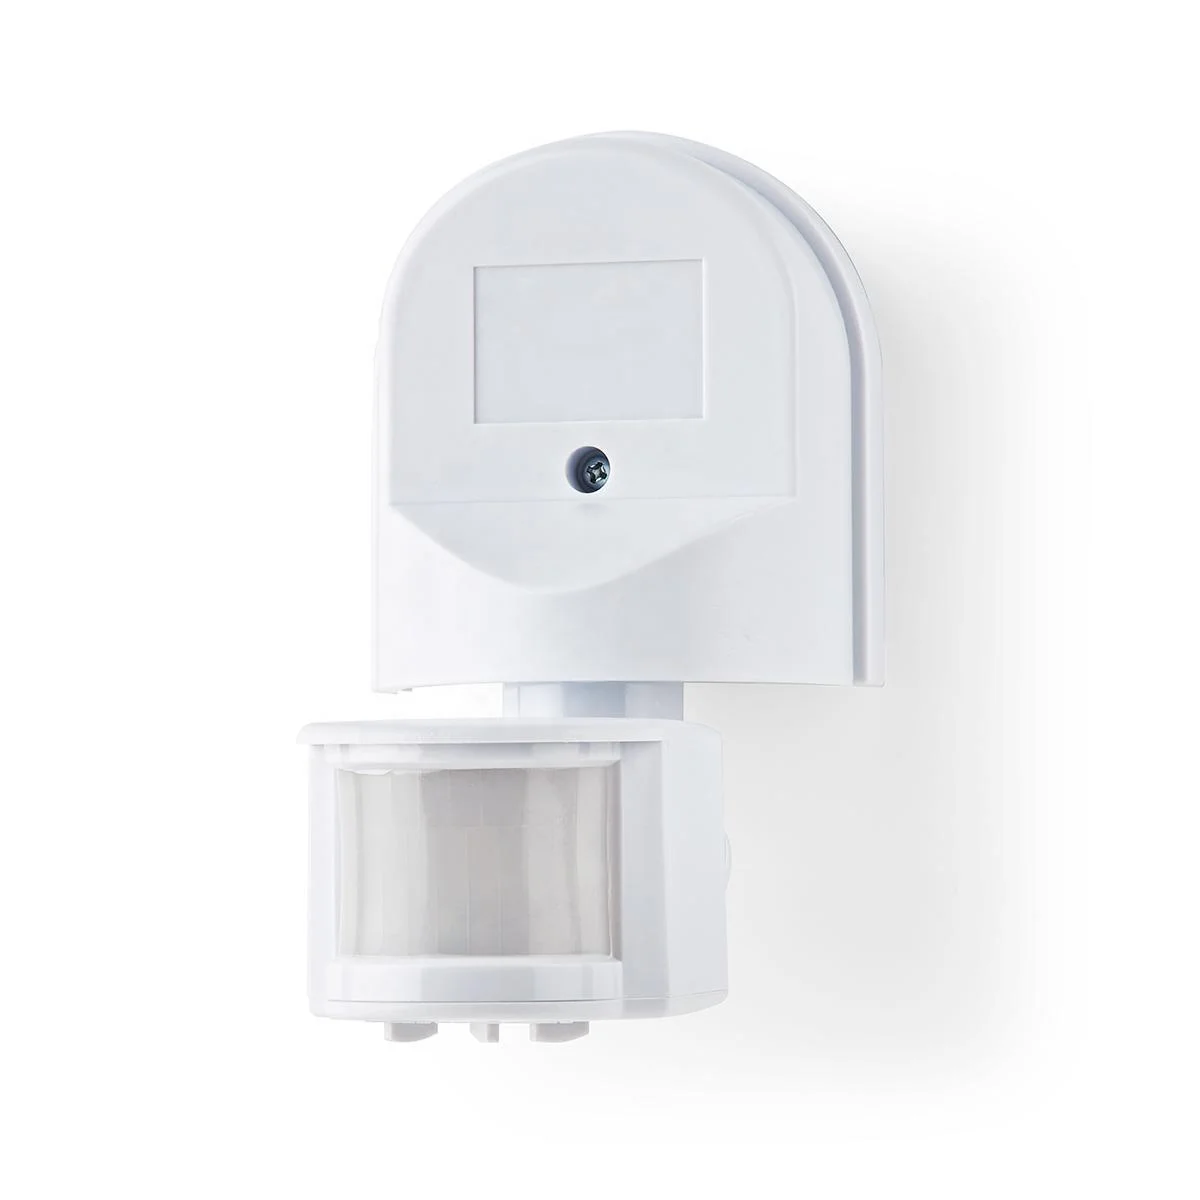 PIR motion sensor wall mounting 180° detection 12m range indoor use IP44 LEDs 